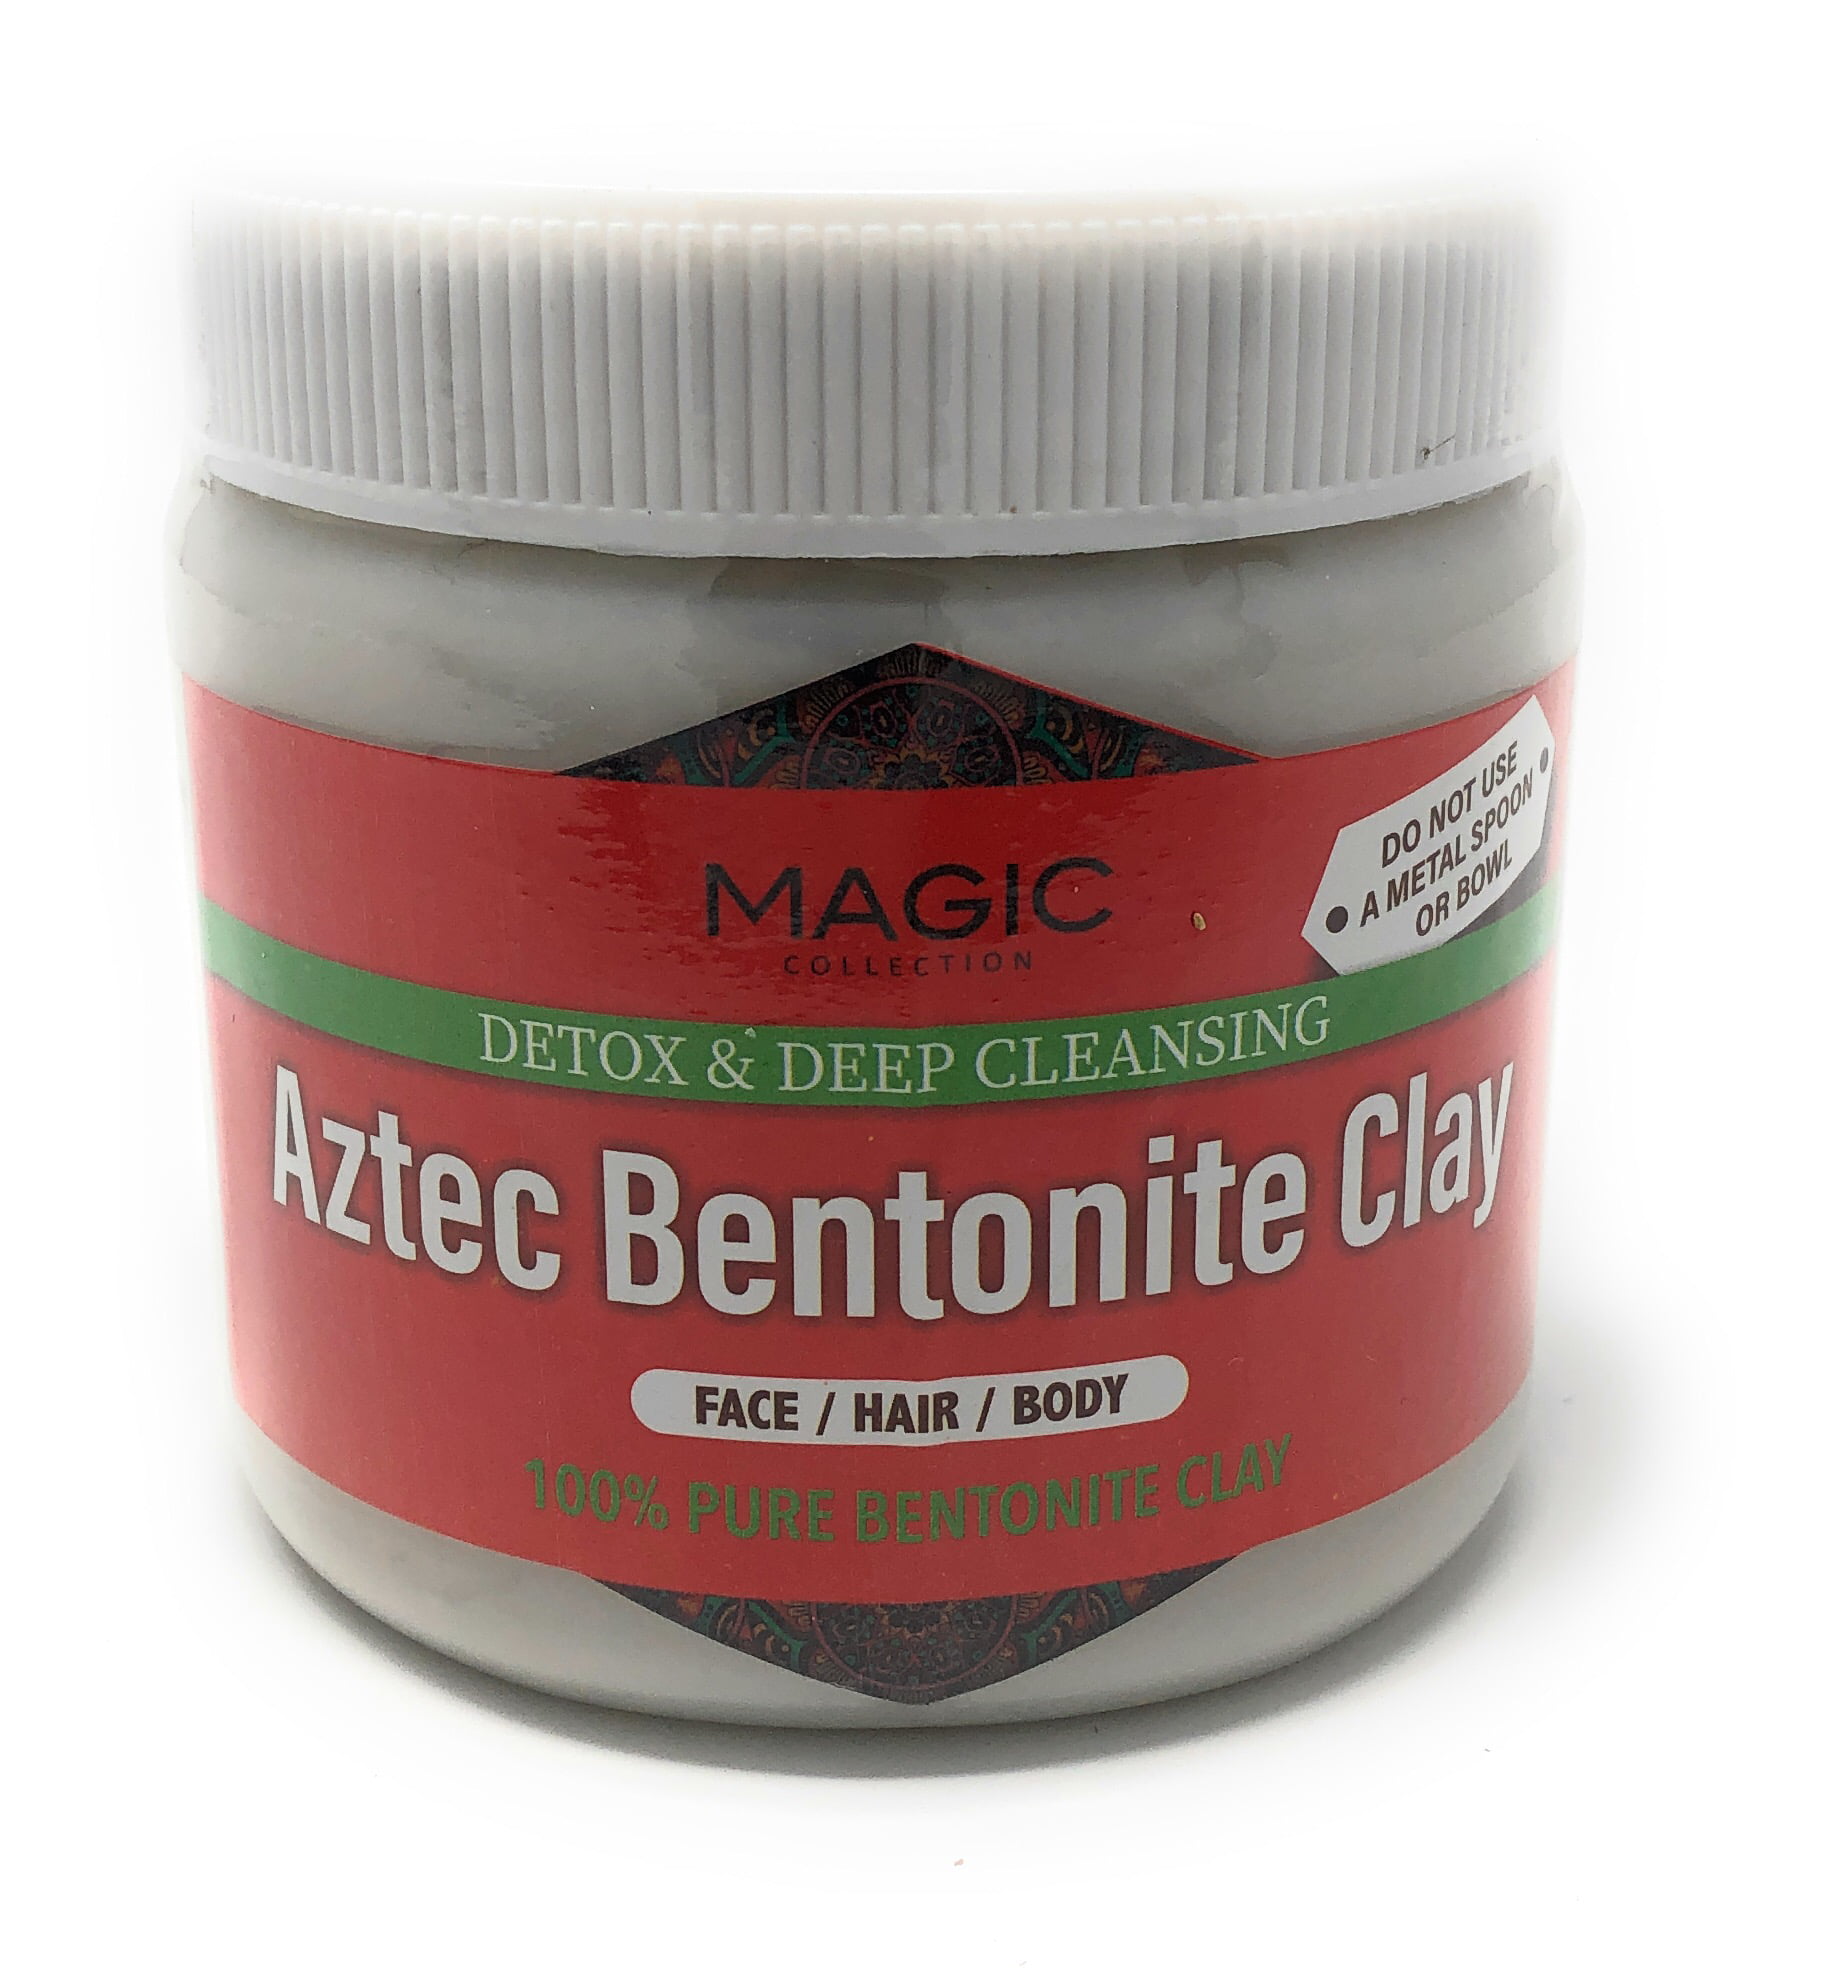 Insister radium Ni Bentonite Clay Pure Food Grade - 2 LB Natural, Powerful, Detoxifying  Powder, Healing Skin And Body Corrector. Use Internally or For Face Masks,  Acne, Detox, Toothpaste, etc. Fossil Power Brand - Walmart.com